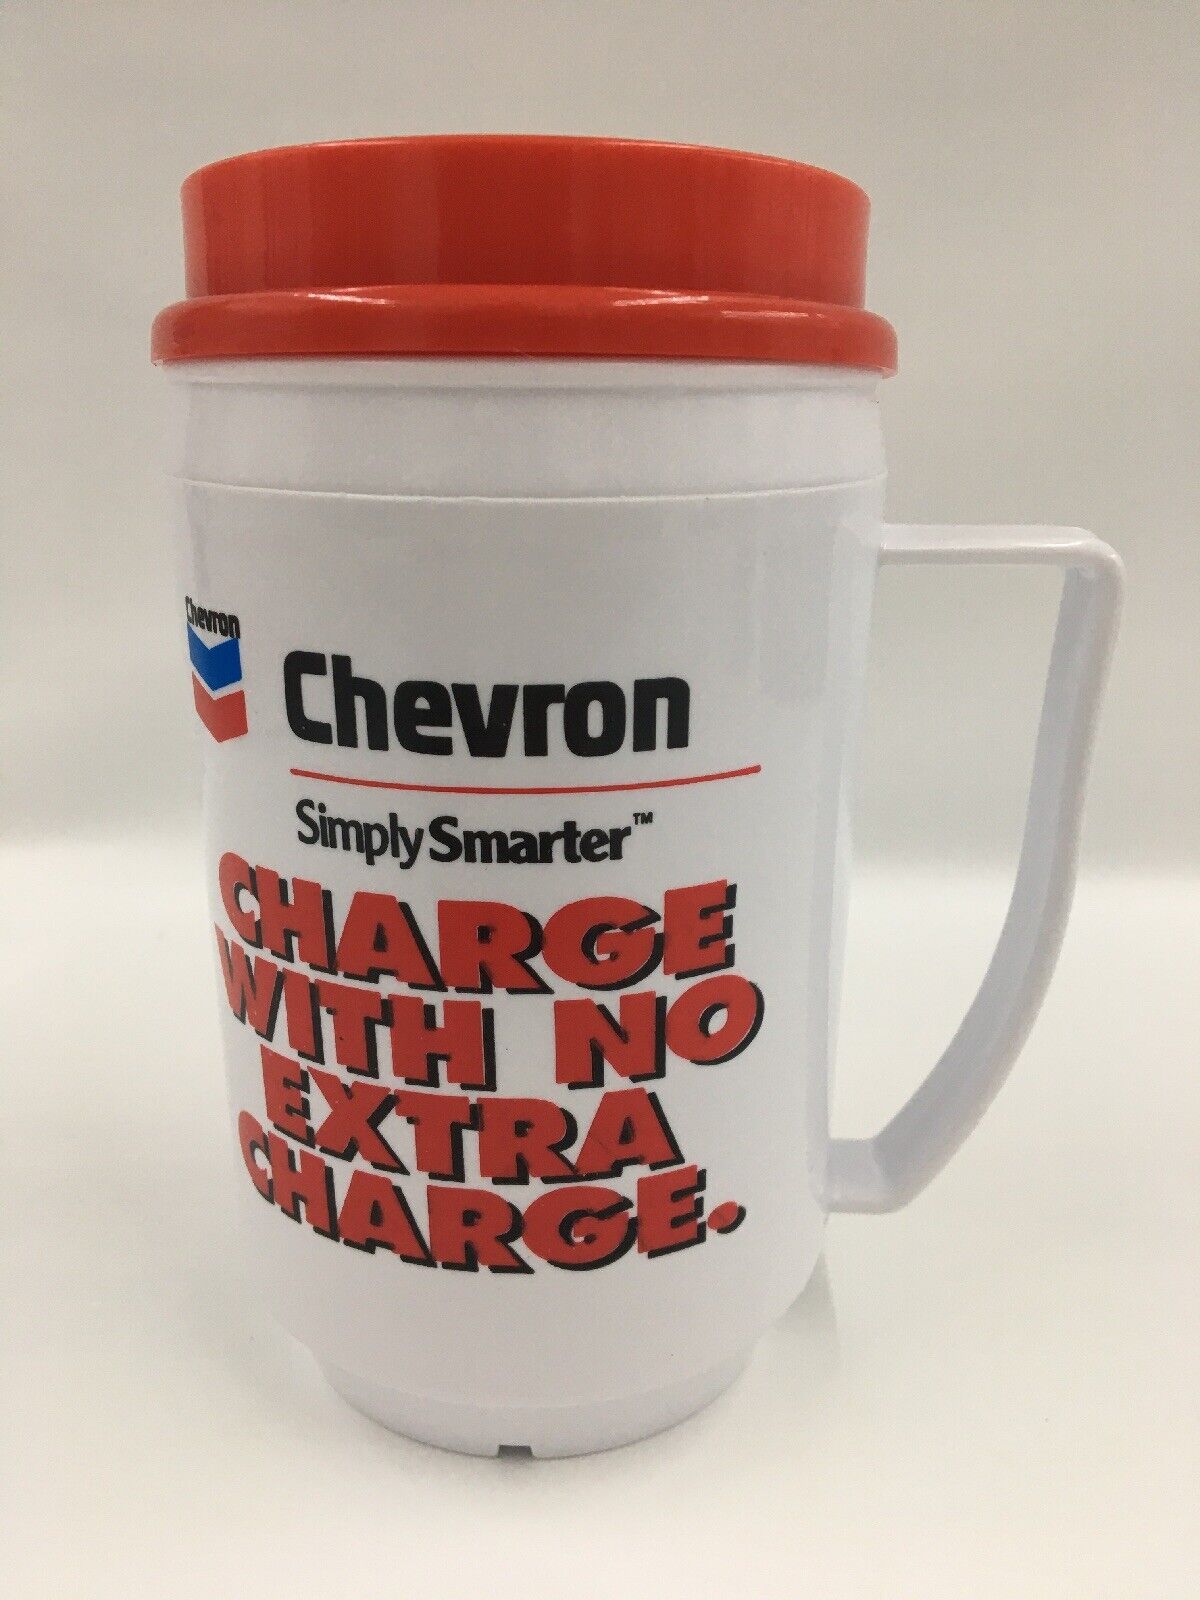 Chevron Snap Lid Plastic 12 Oz Mug In Original Packaging NOS Vintage Promo